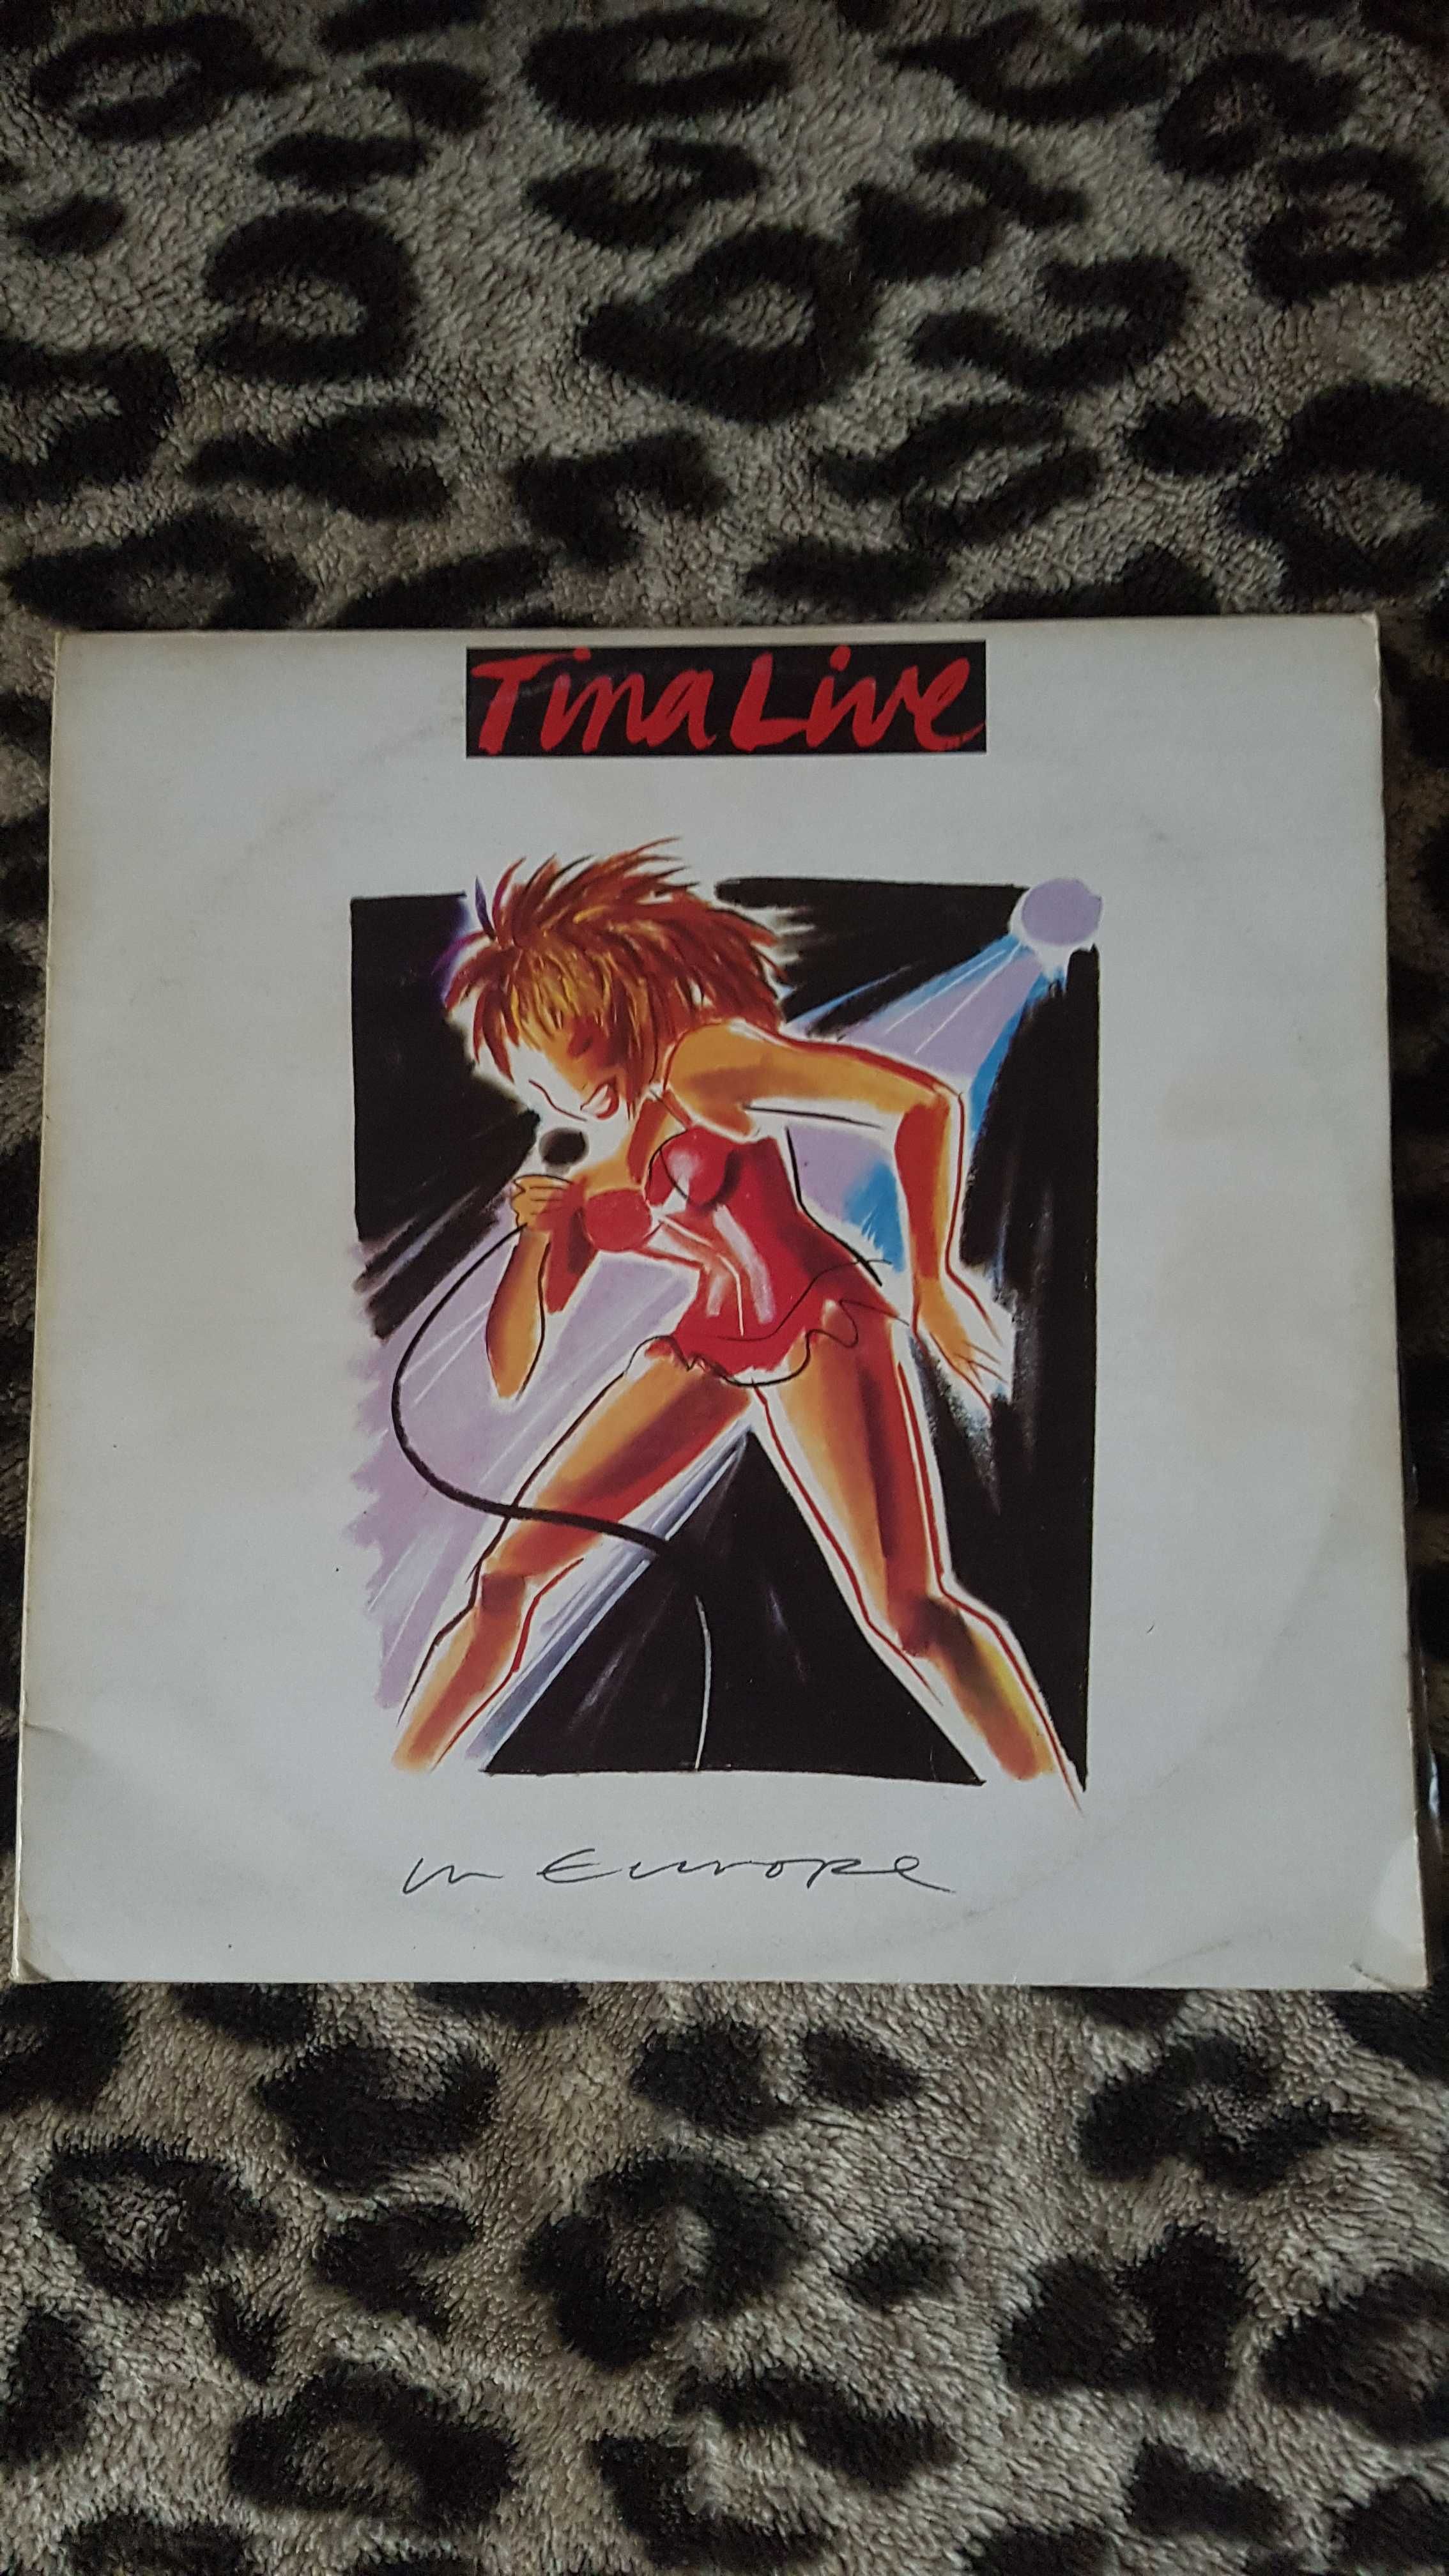 Tina Turner Live in Europe 3 x vinyl